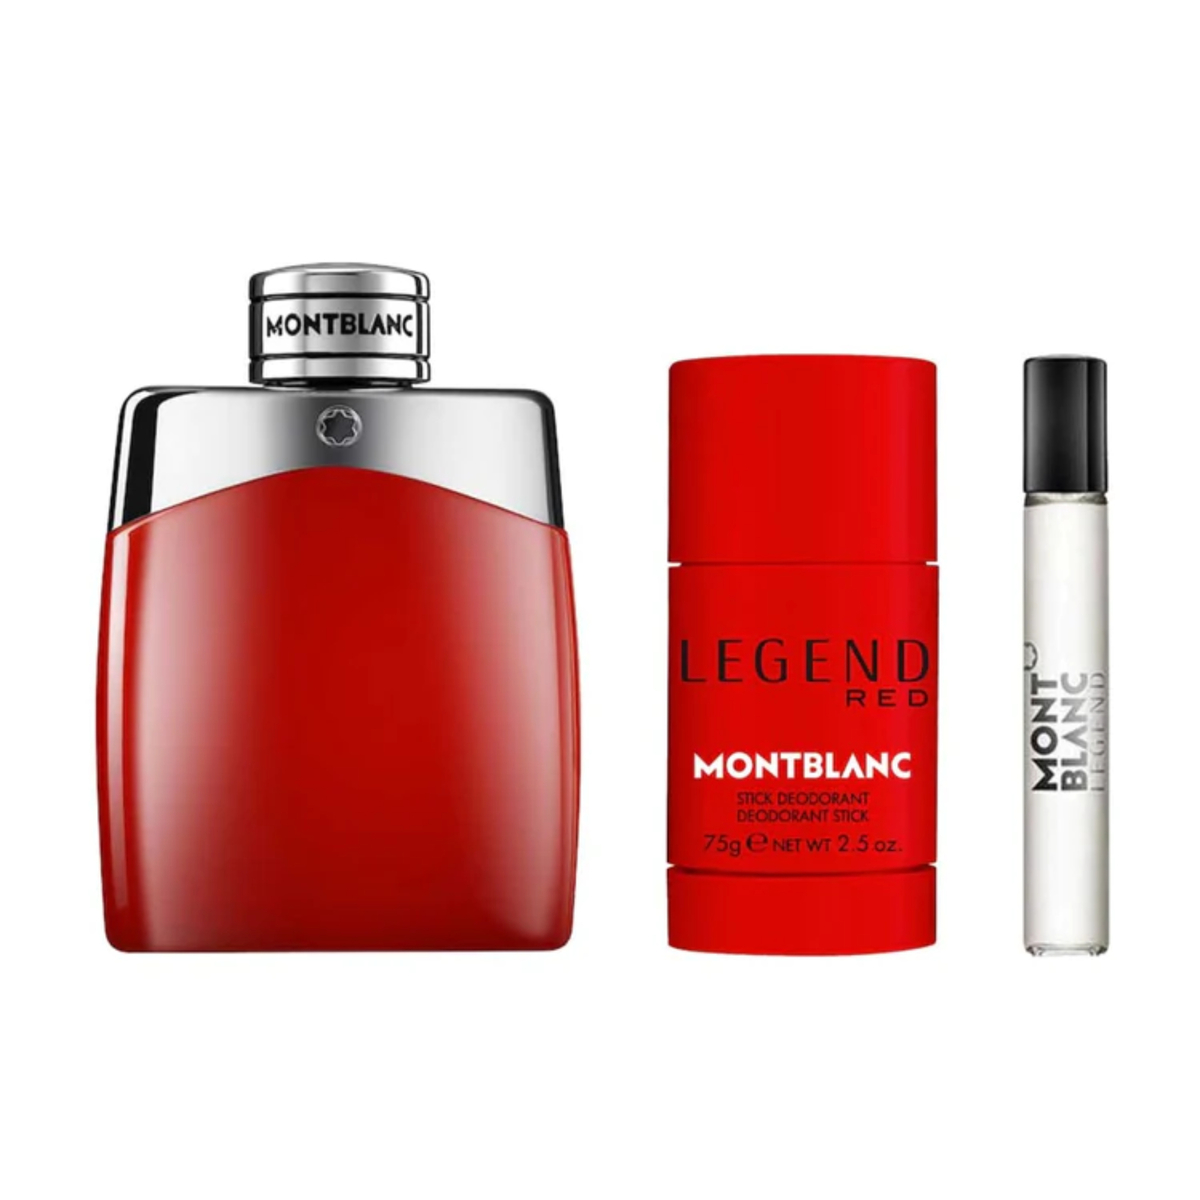  Legend Red Set Eau De Parfum For Men 100ml + 75 Gram Deostick + EDP, 7.5ml